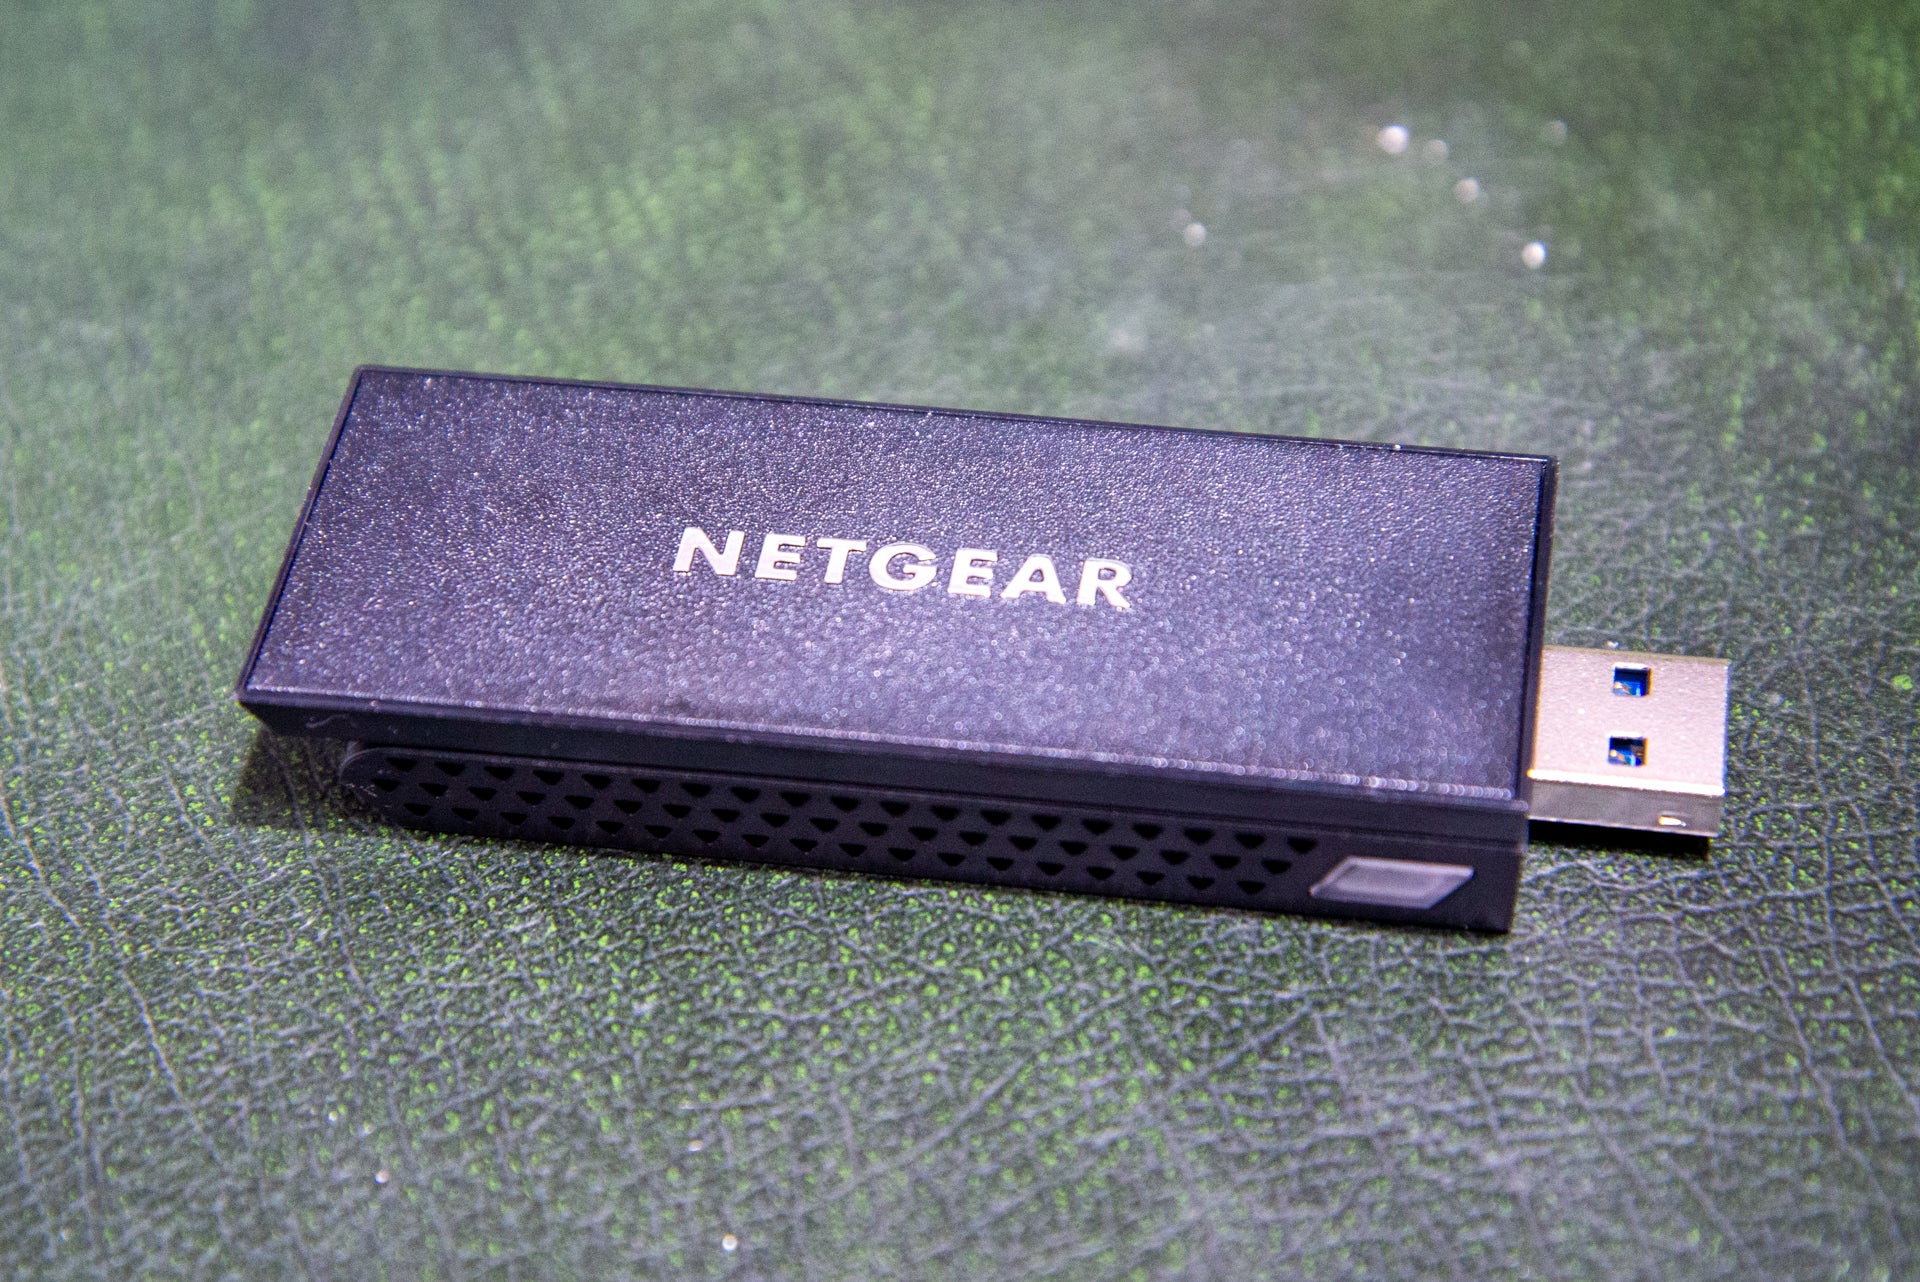 Netgear Nighthawk Tri-Band USB 3.0 Adaptador WiFi A8000 dongle